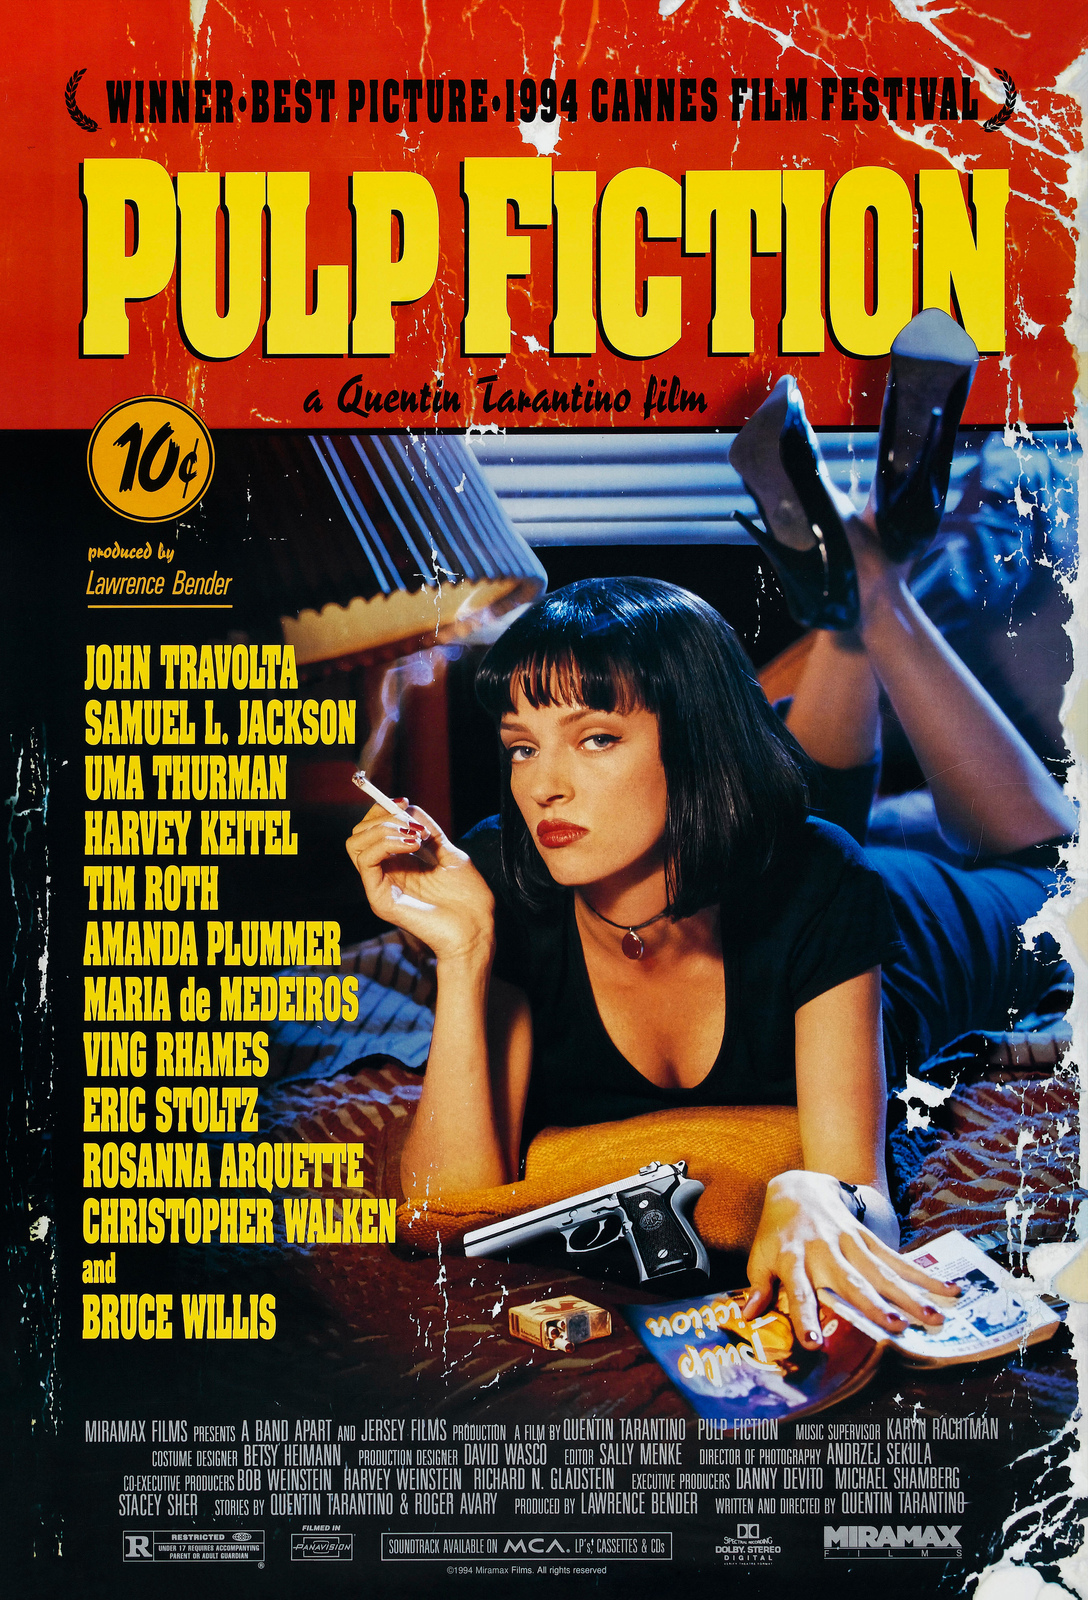 Pulp Fiction Movie Poster Quentin Tarantino Art Film Print Size 24x36 27x40